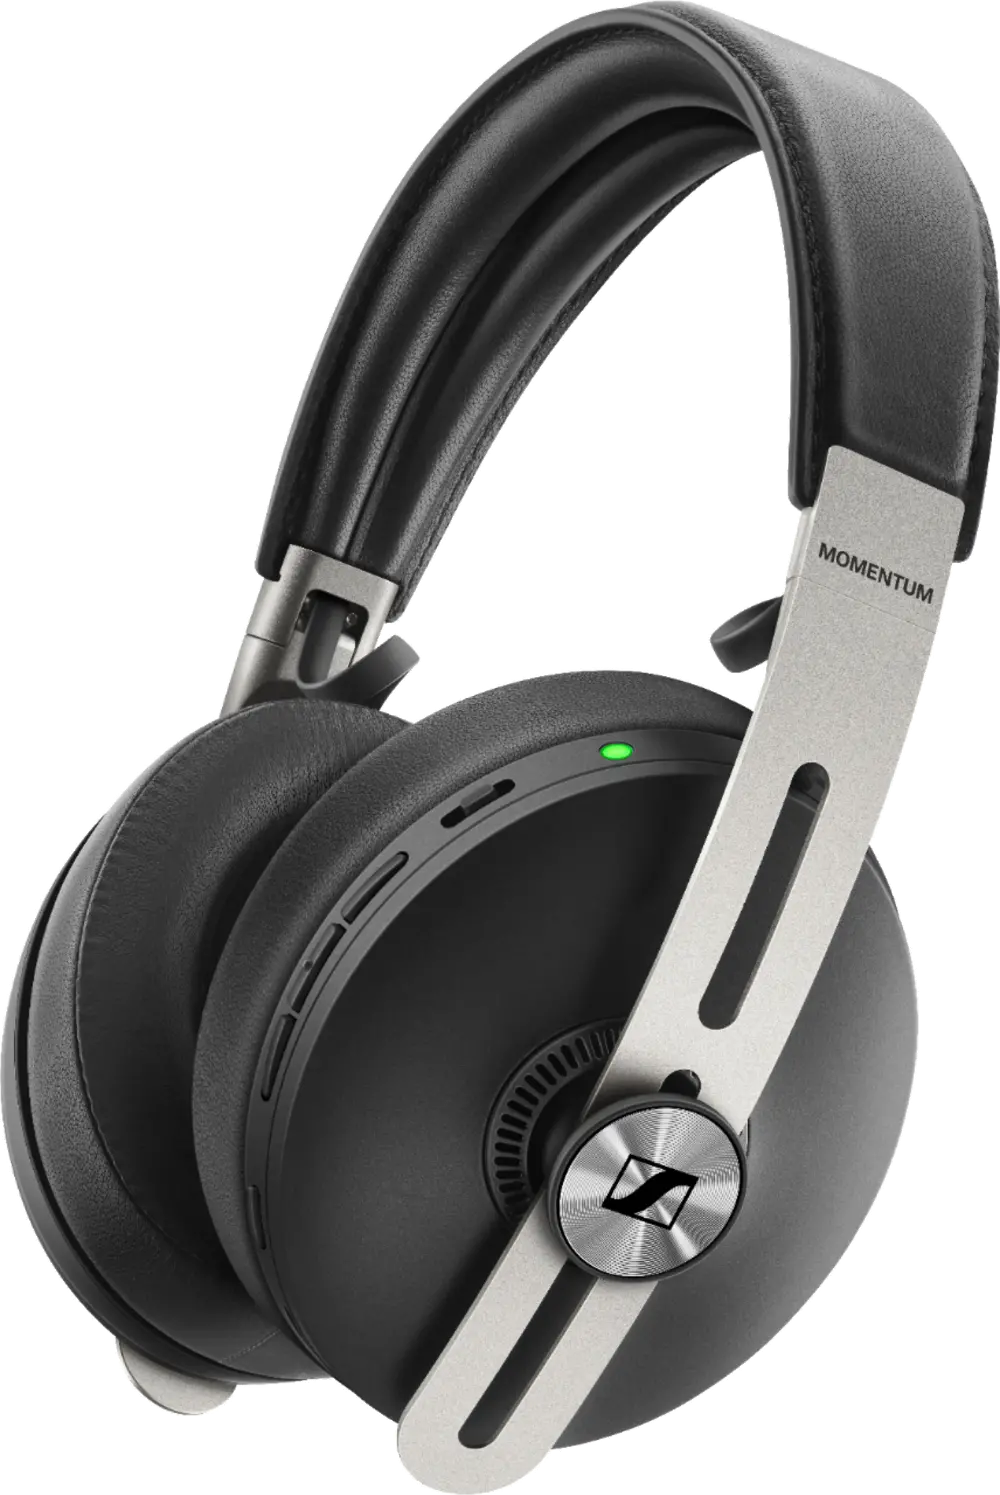 M3AEBTXL/MOMENTUM-OE Sennheiser Momentum Wireless Over-the-Ear Headphones - Black-1